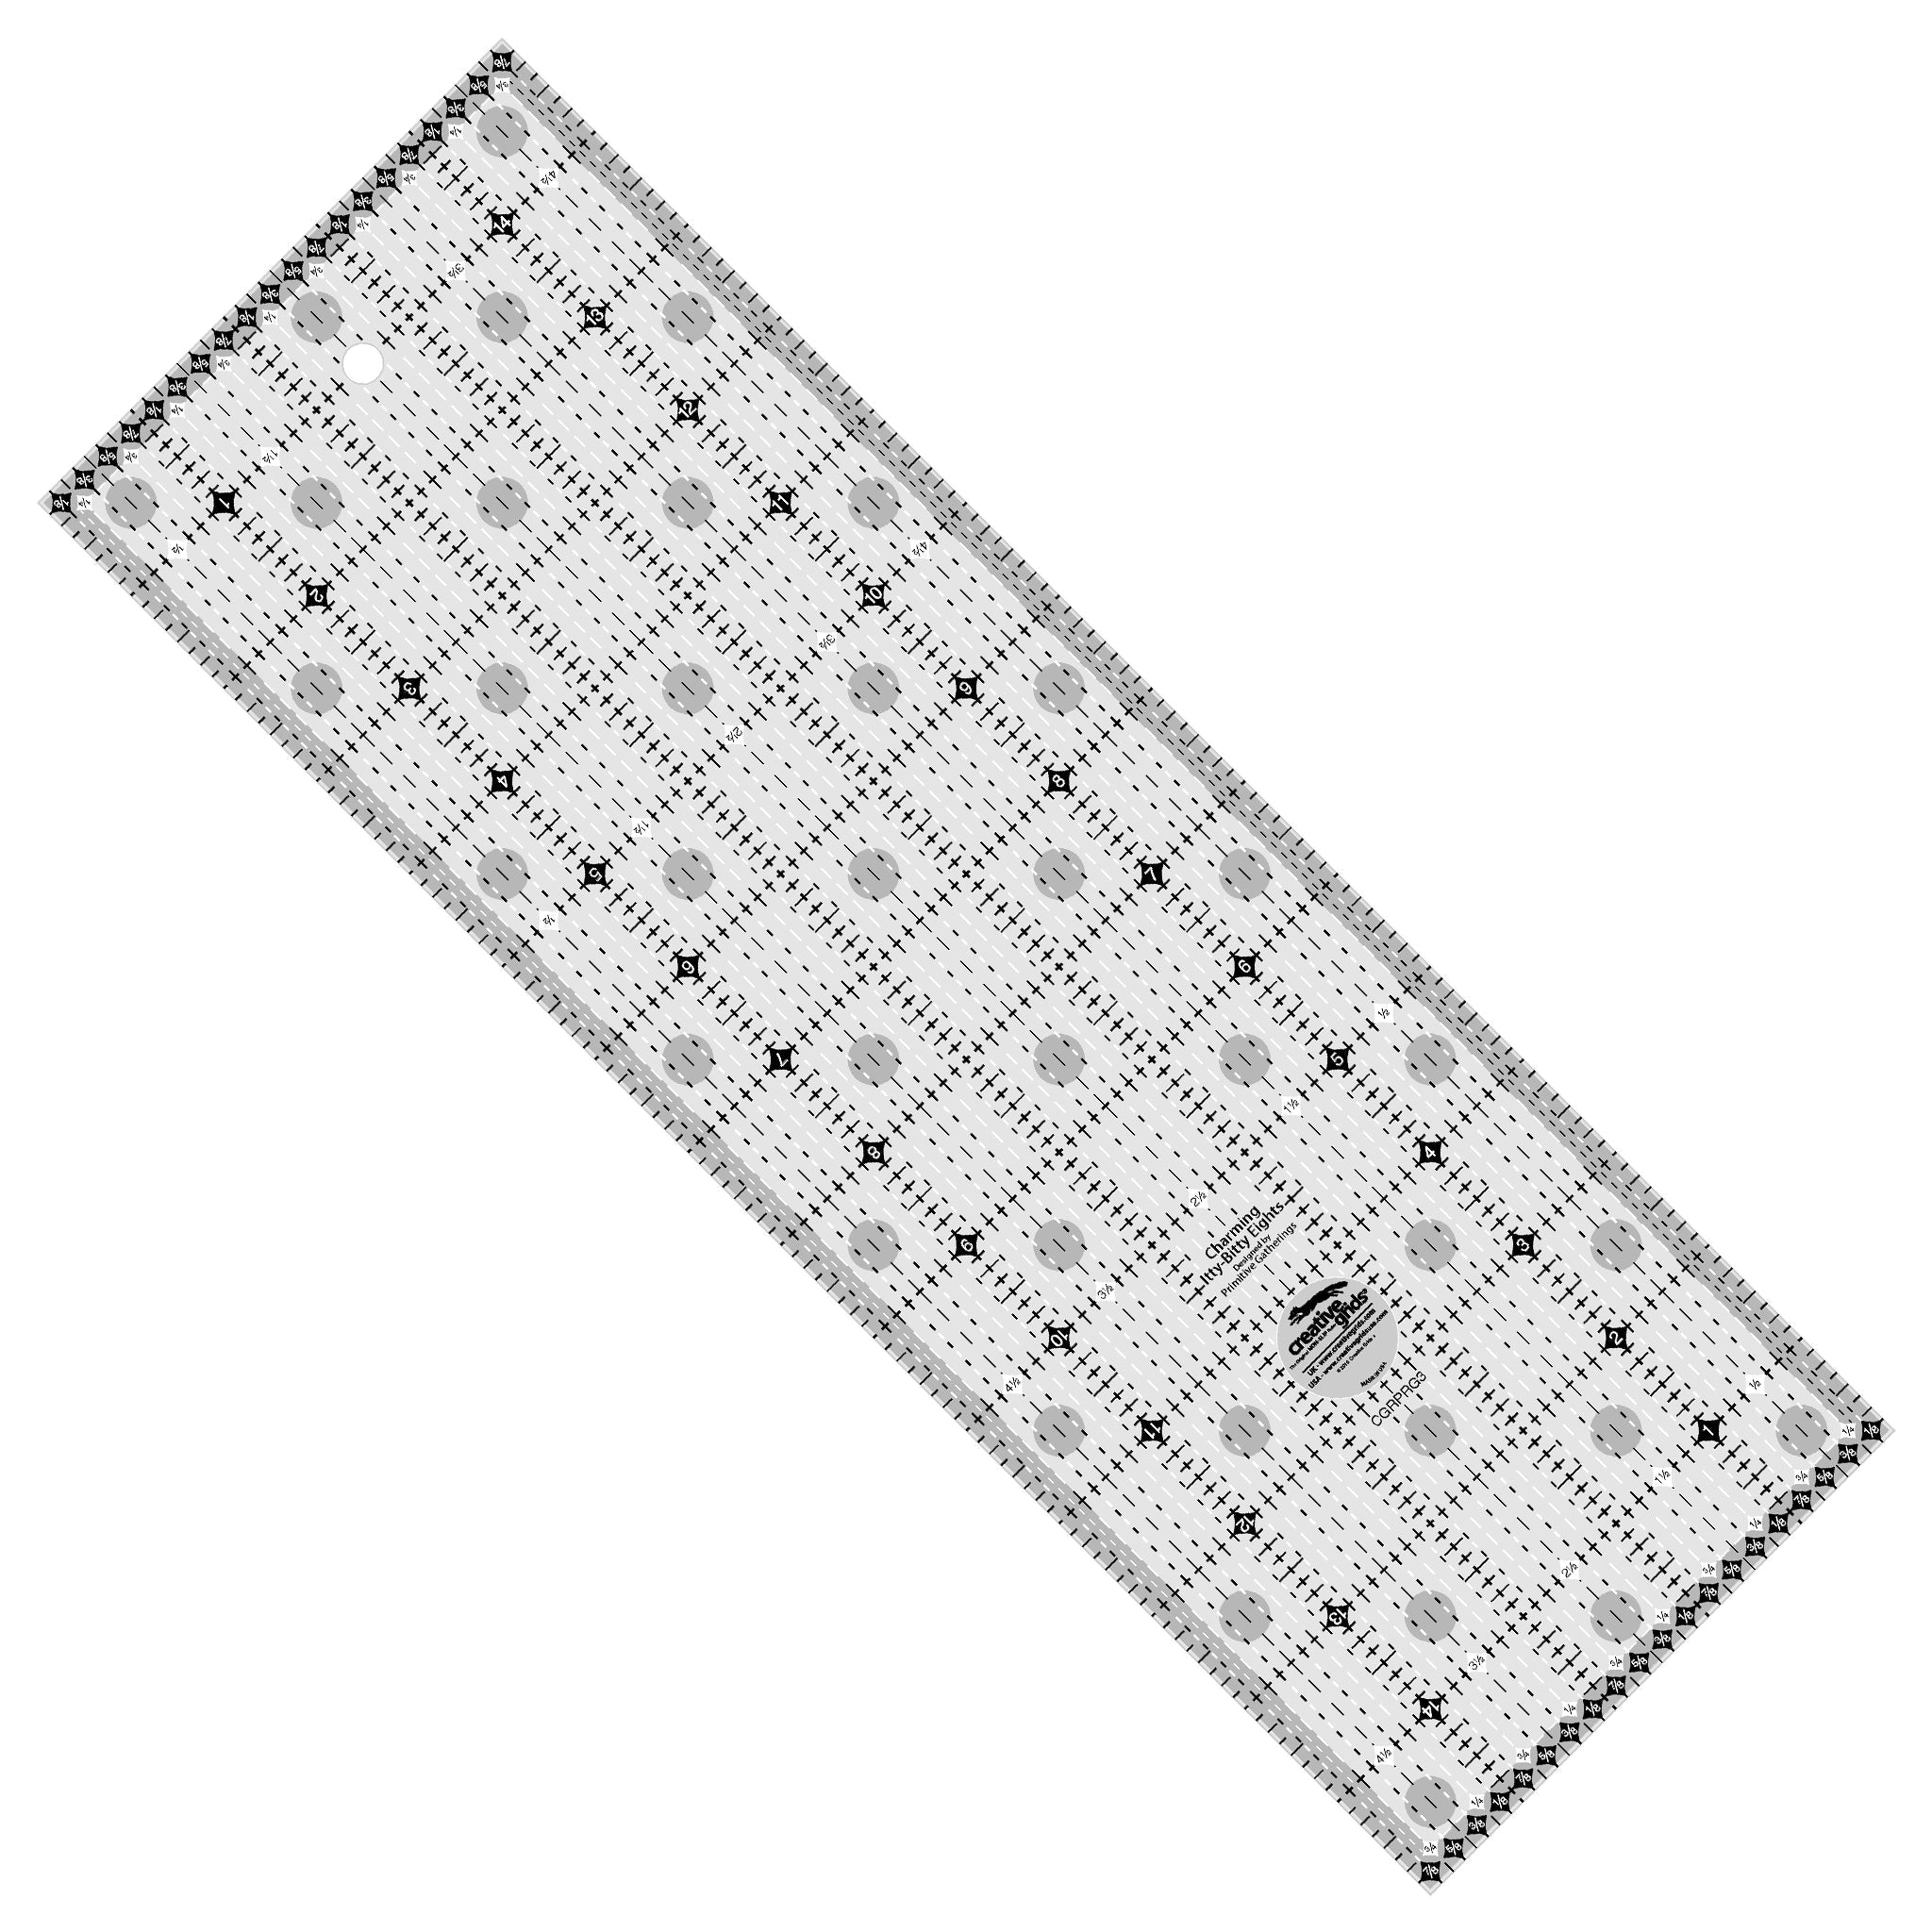 Creative Grids - 5-1/2in Square Ruler